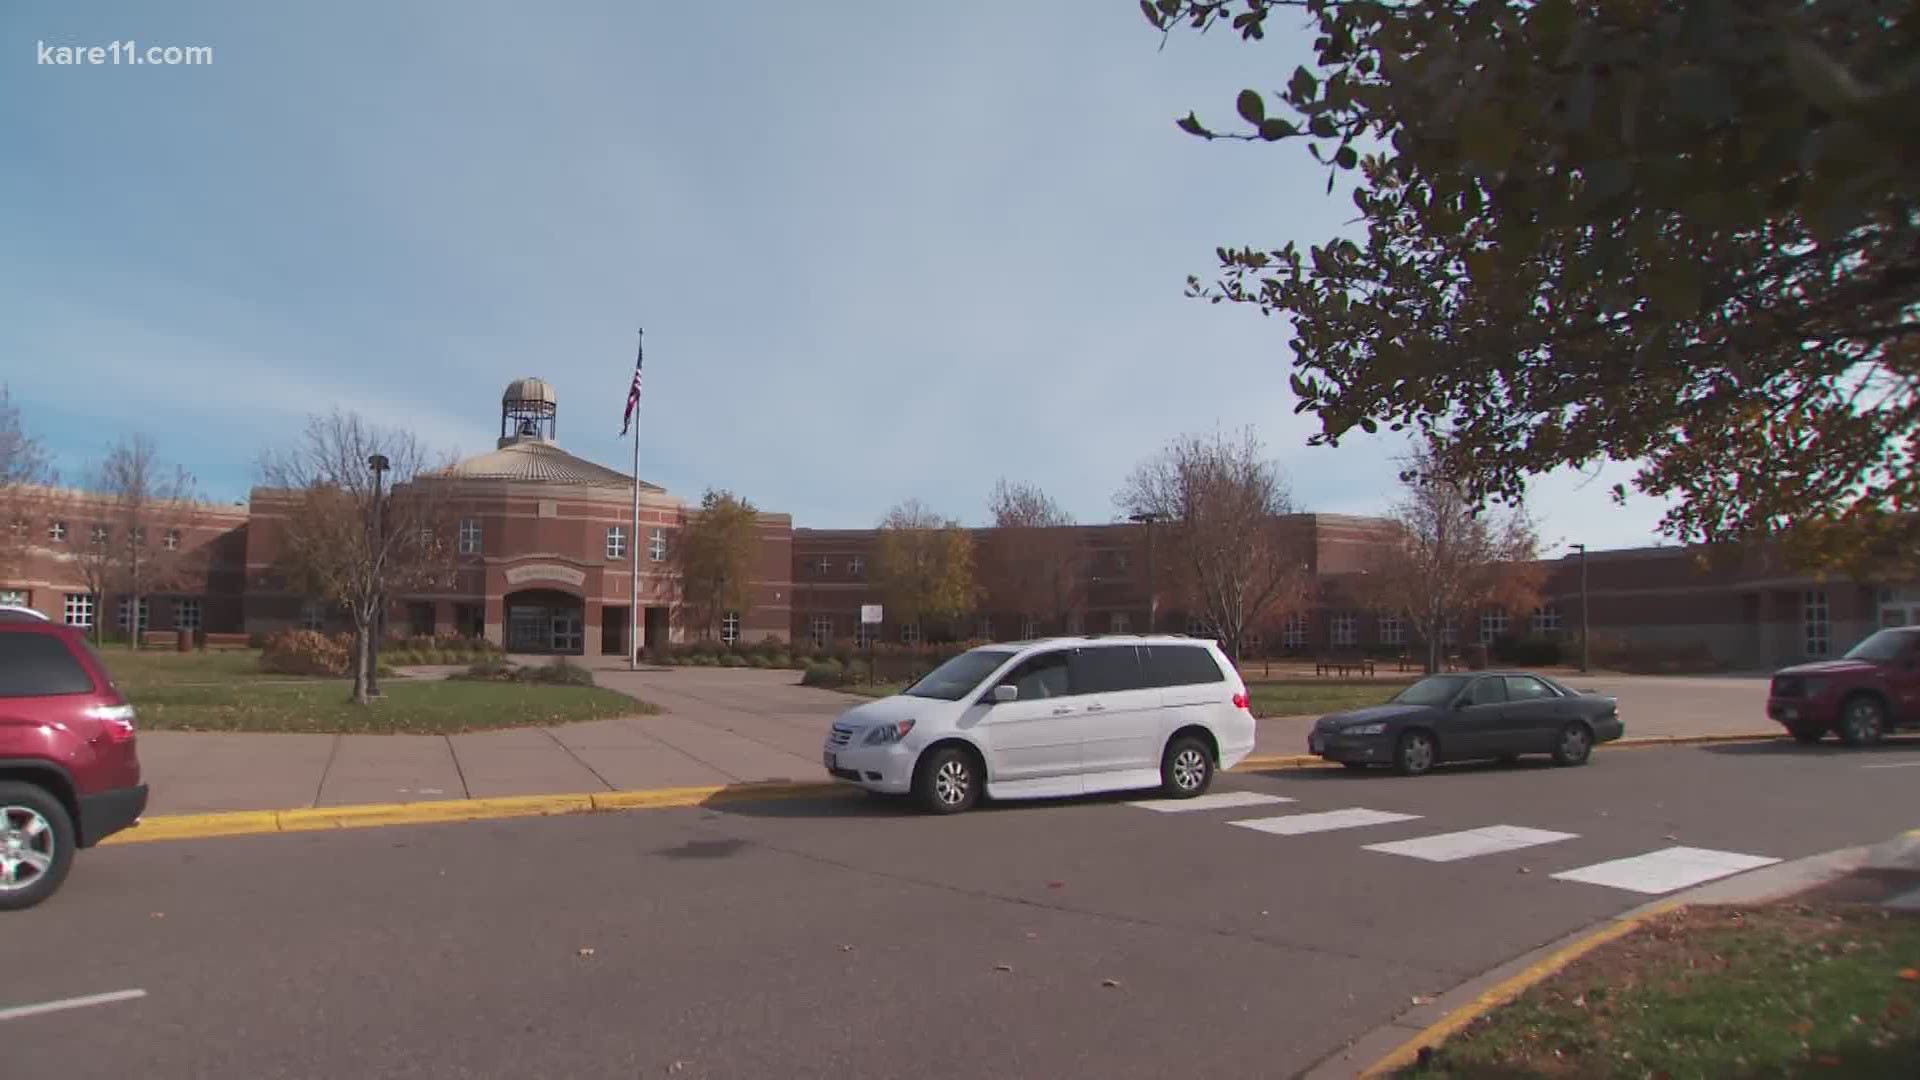 Minnesota schools asked to consider three scenarios for fall